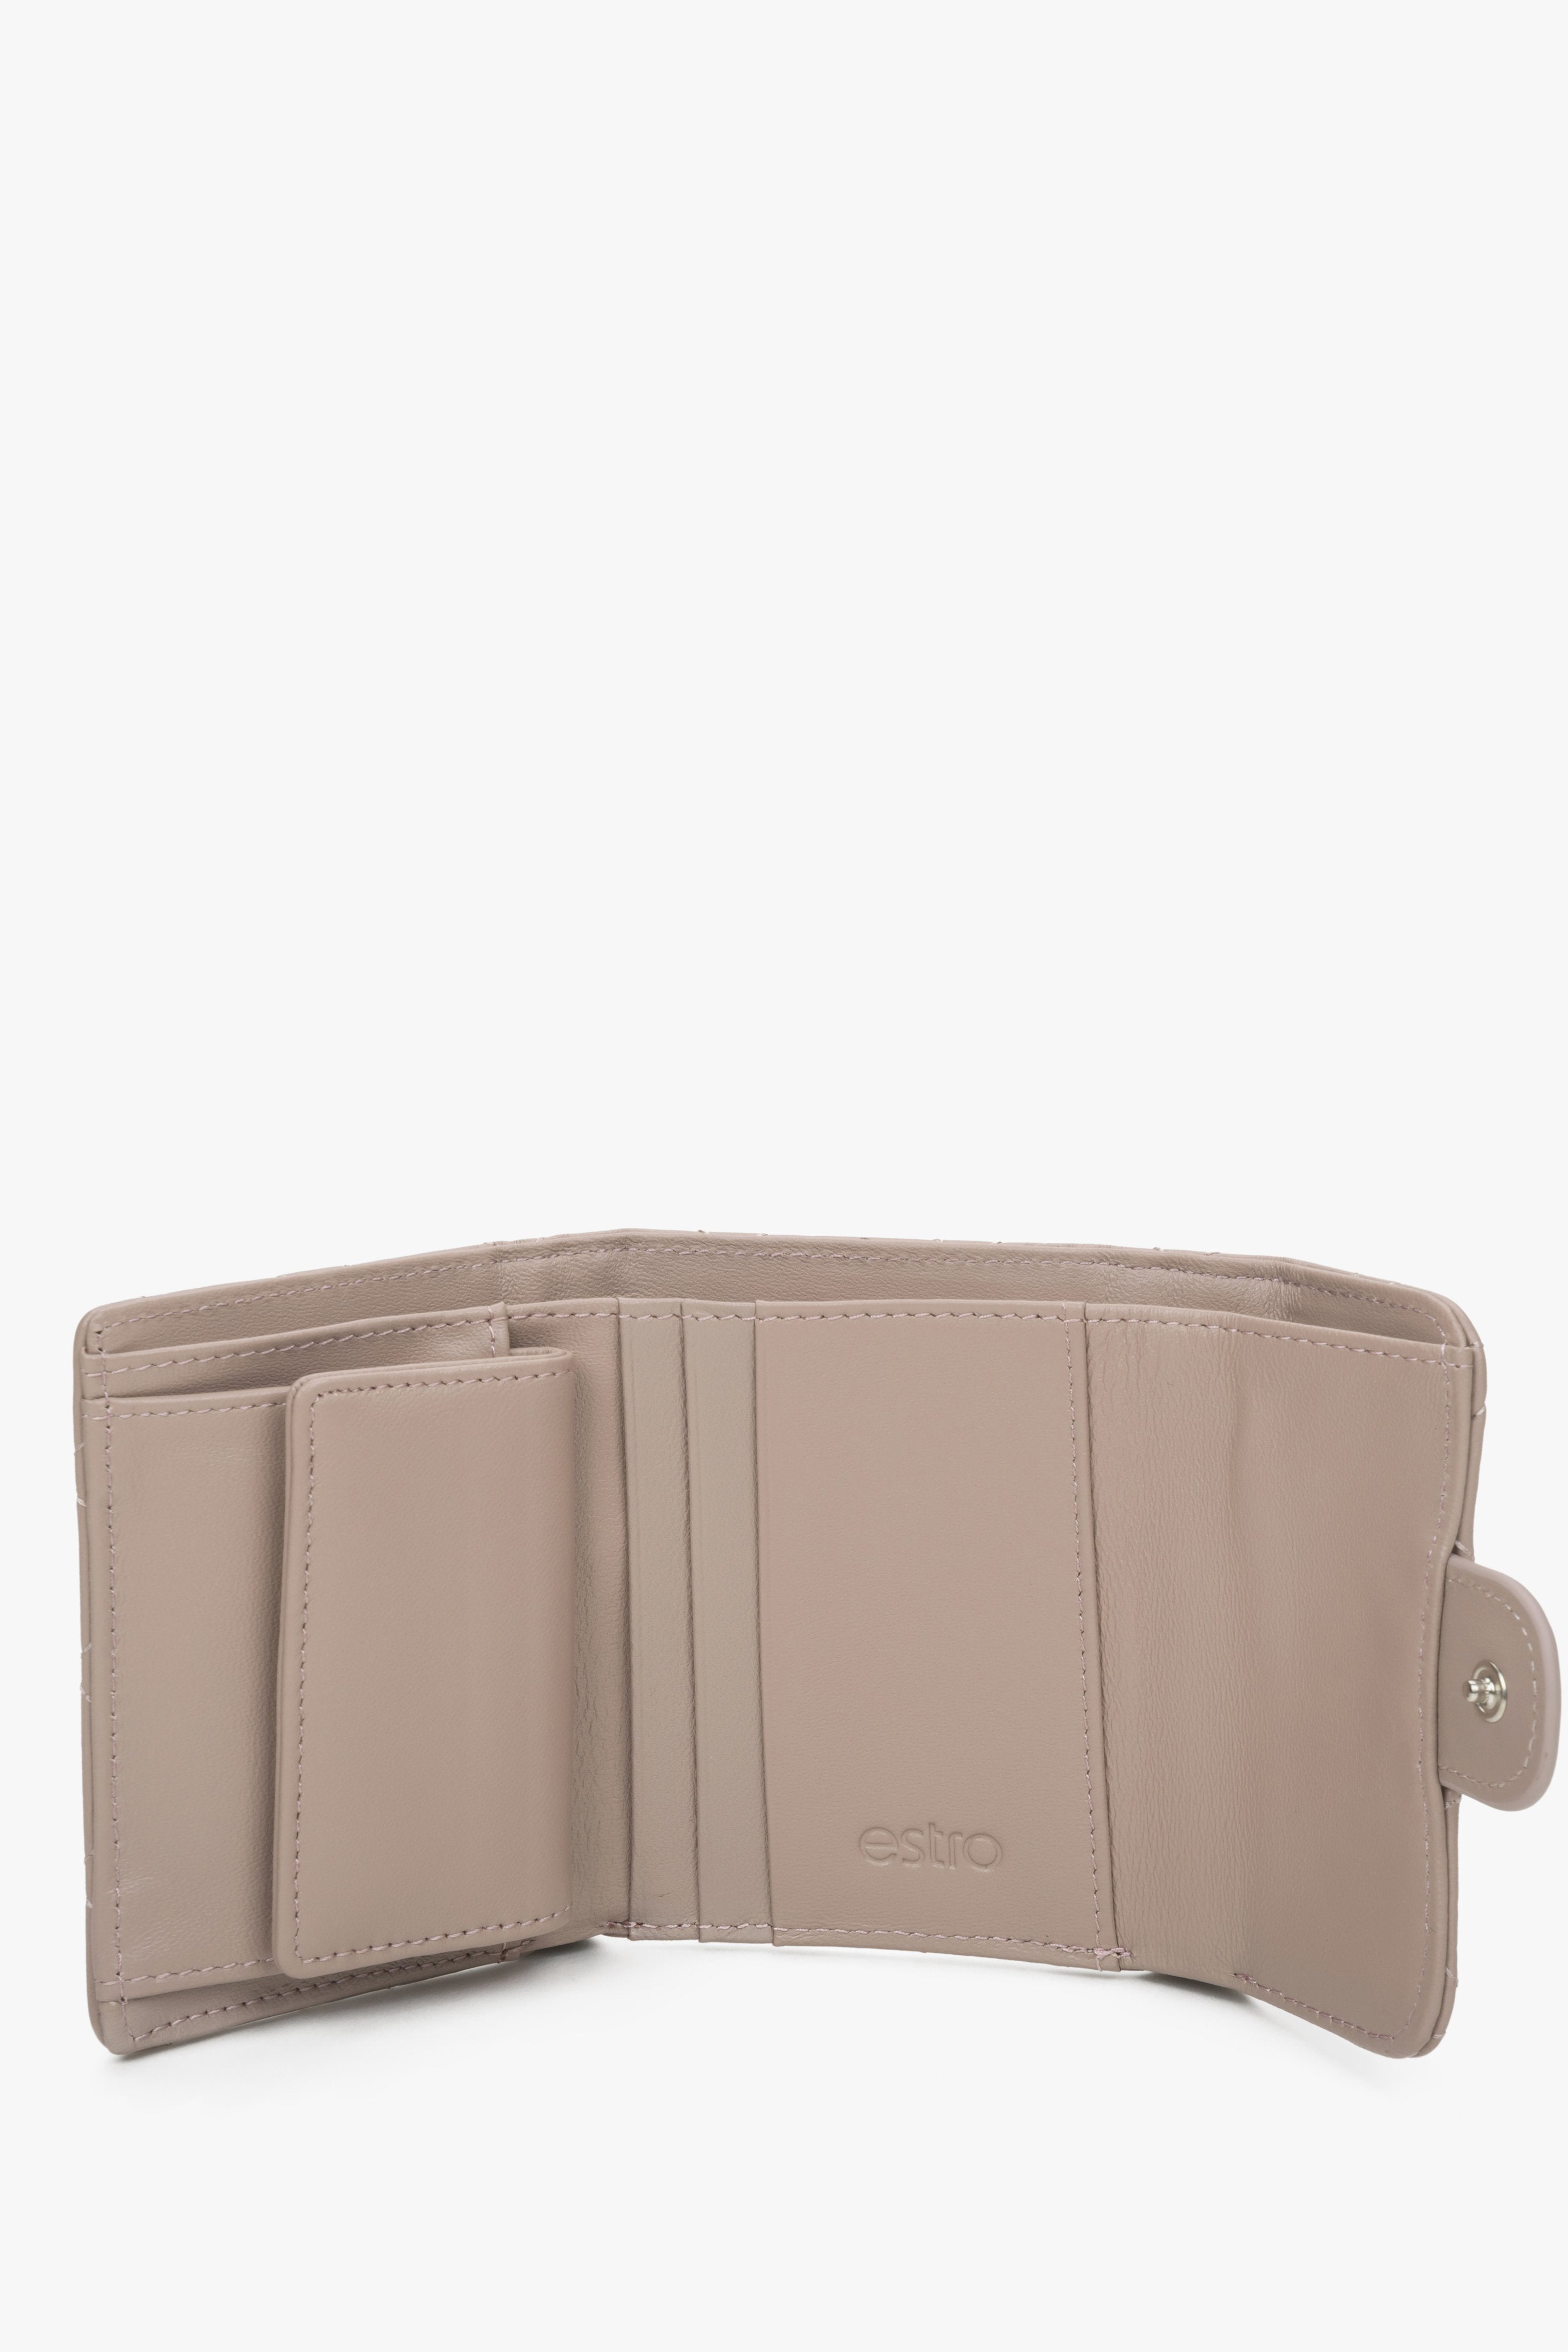 A light pink handy women's wallet with Estro embossing - interior.